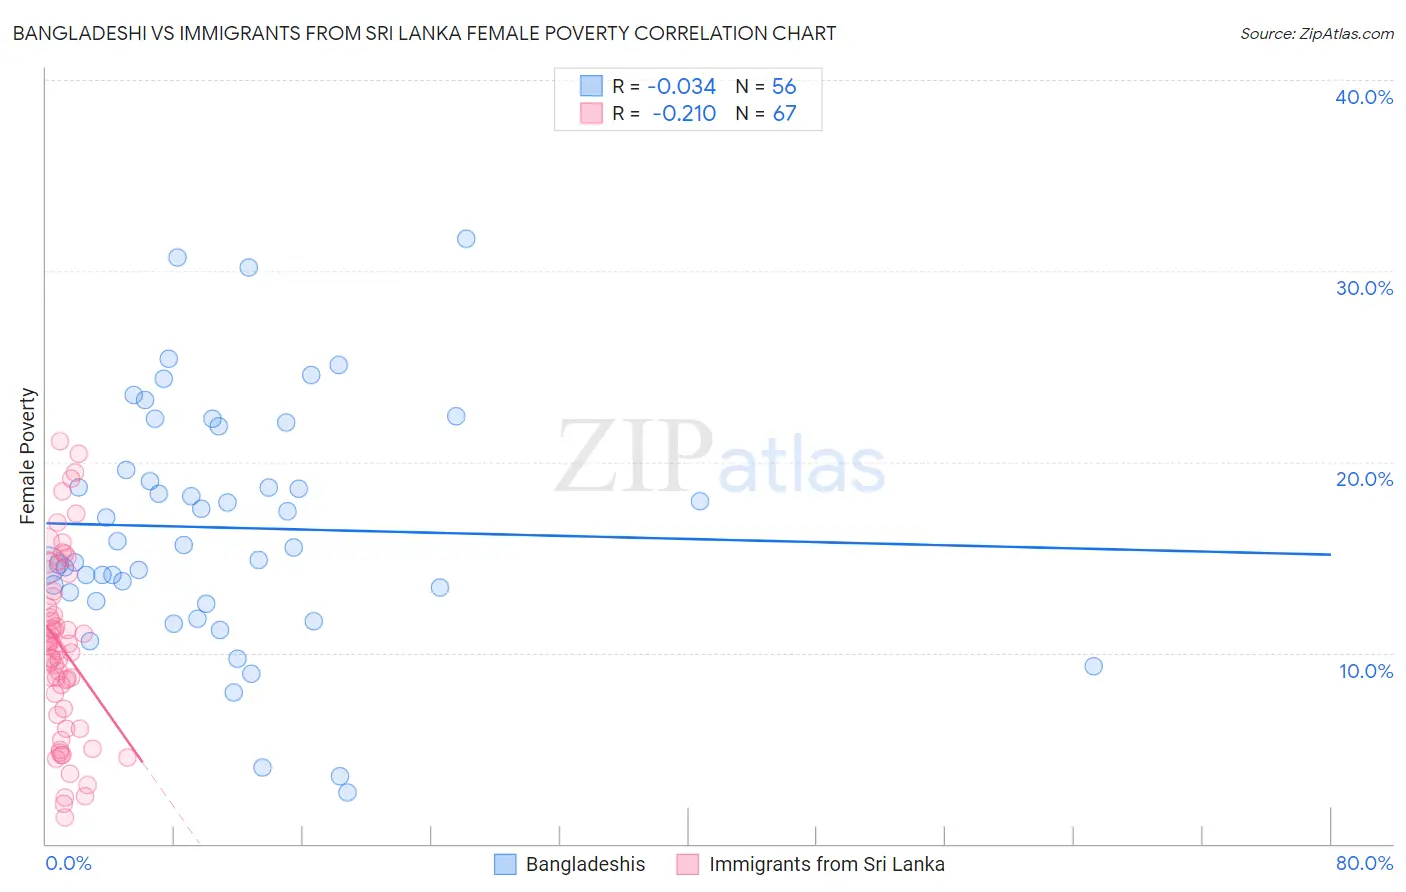 Bangladeshi vs Immigrants from Sri Lanka Female Poverty